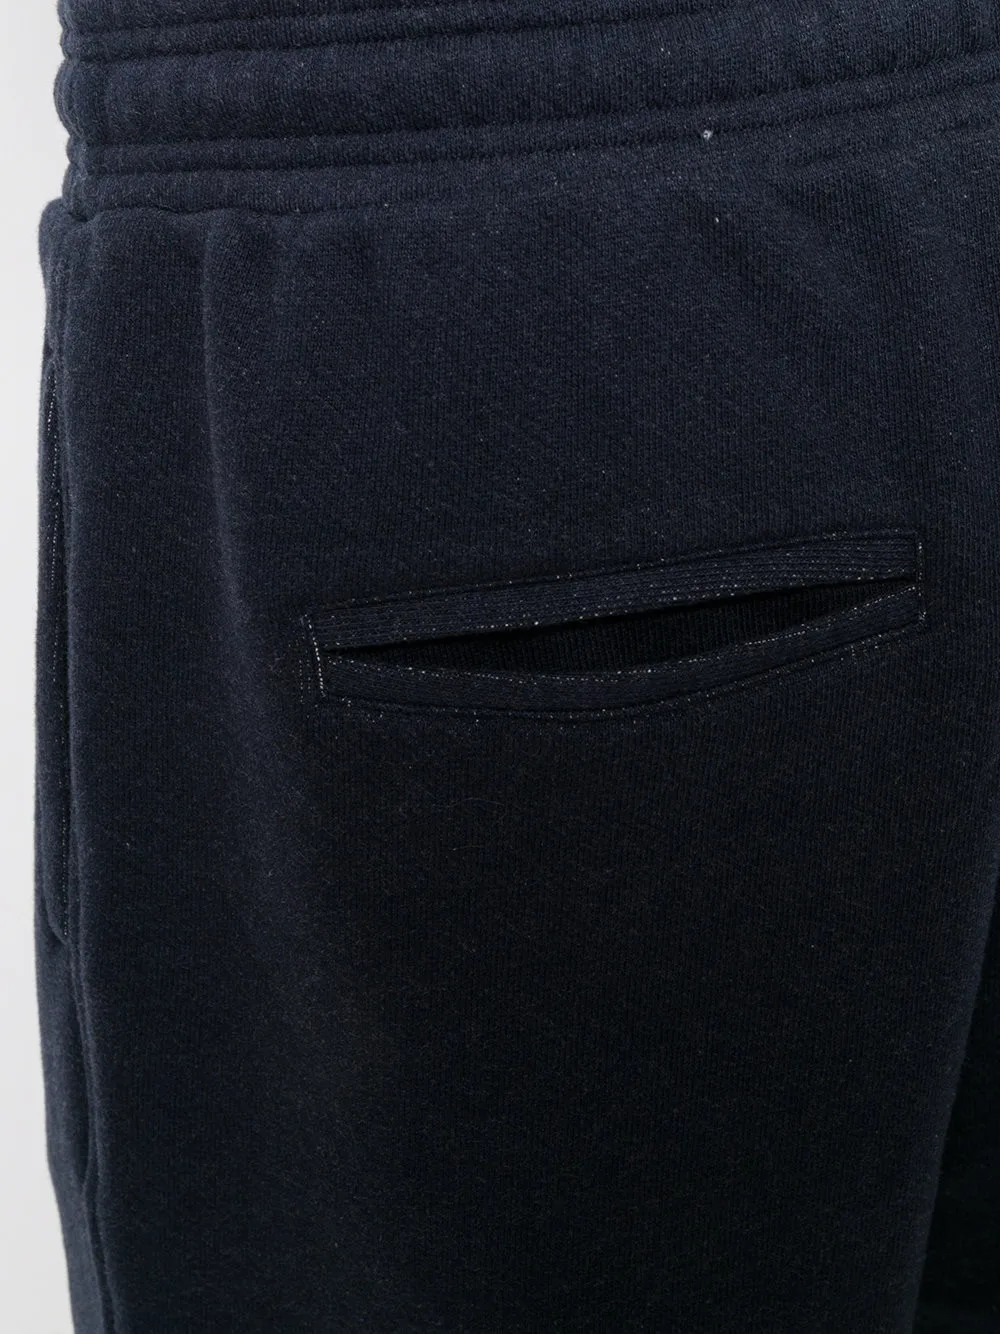 Wholesale Blank Black Sweat Shorts For Men Clothing - Buy Jogger Pants ...